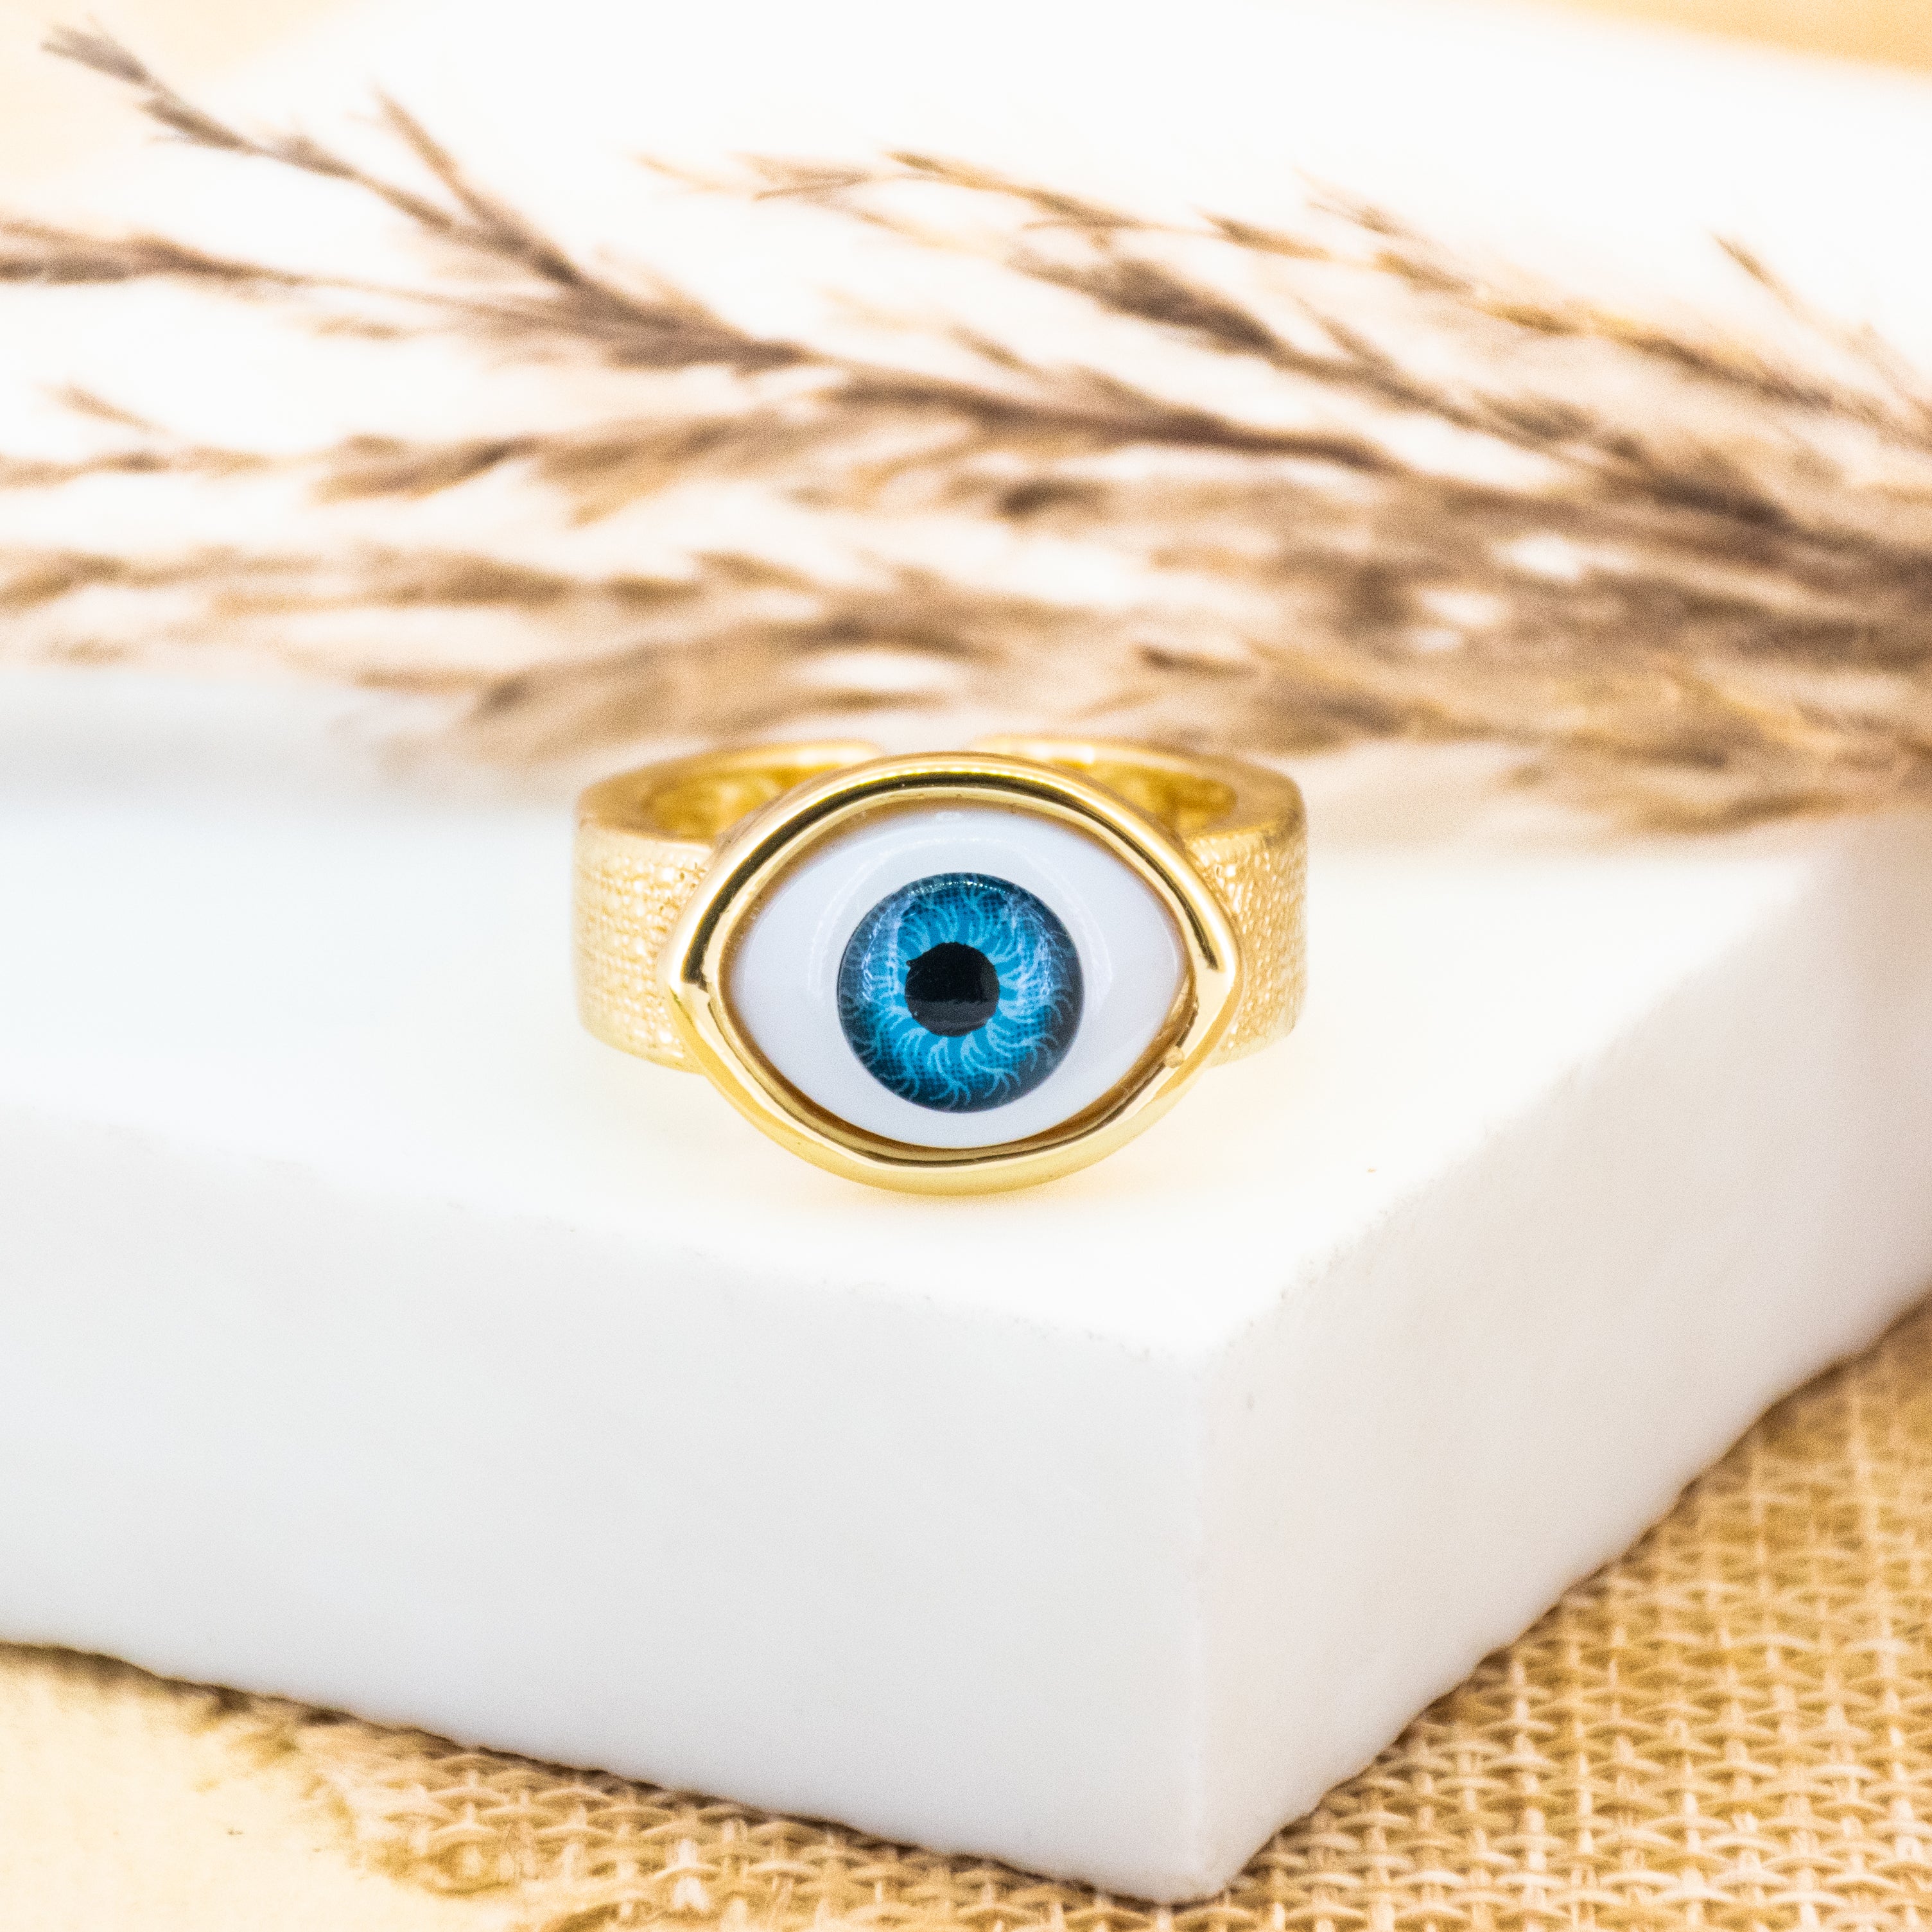 The Evil Eye Original Ring